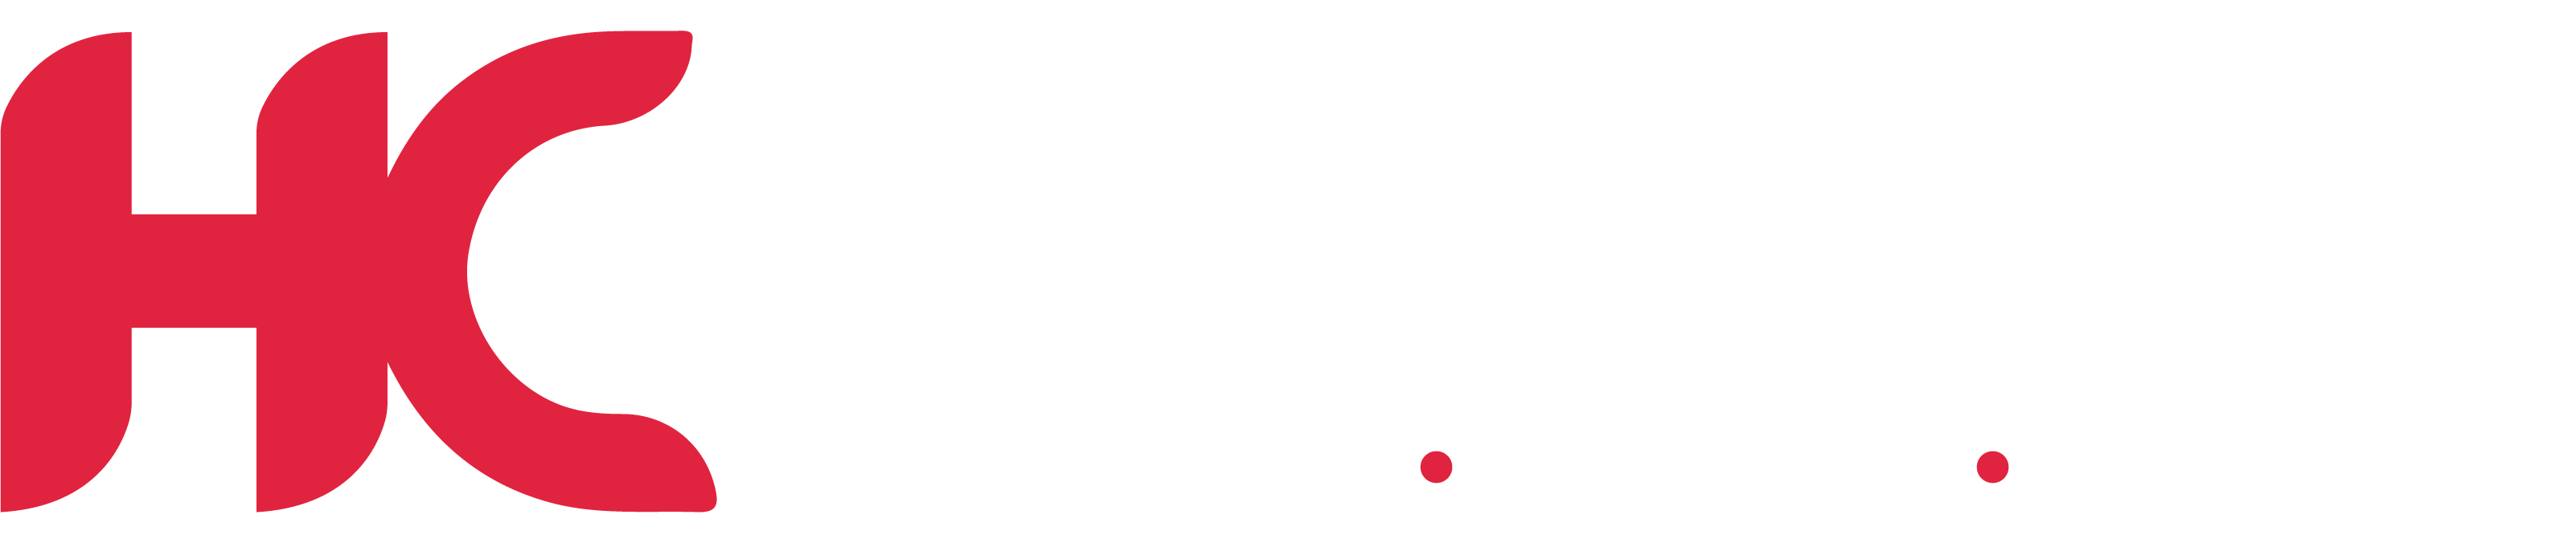 holyculture.net - logo